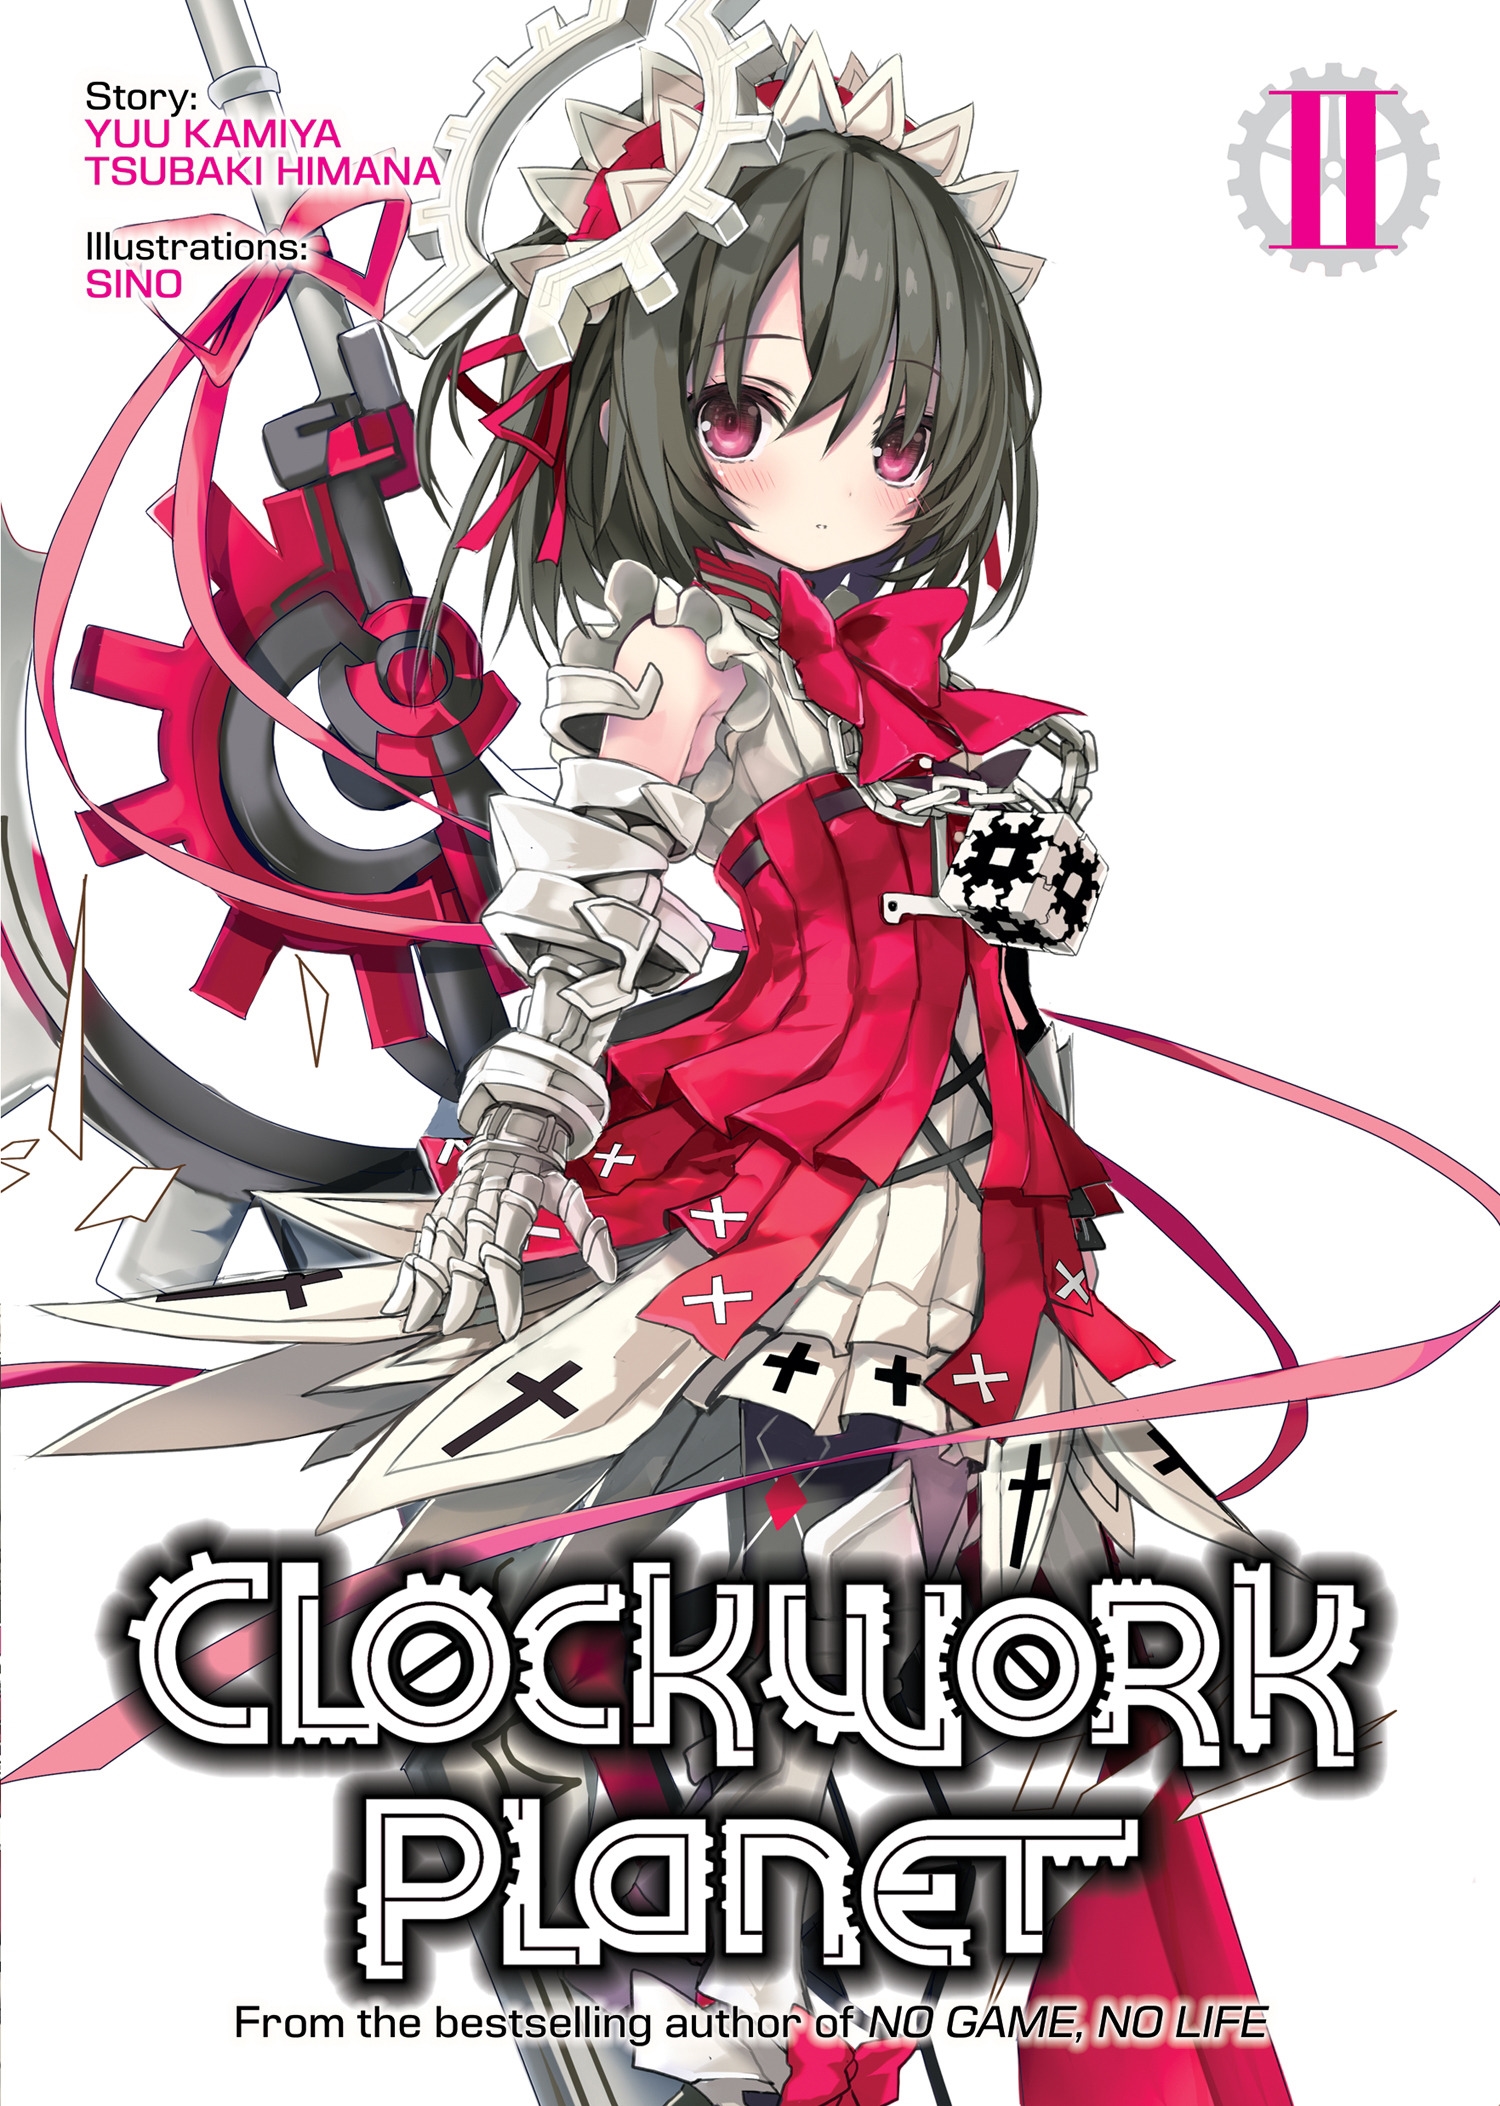 J-Novel Club: Clockwork Planet – English Light Novels